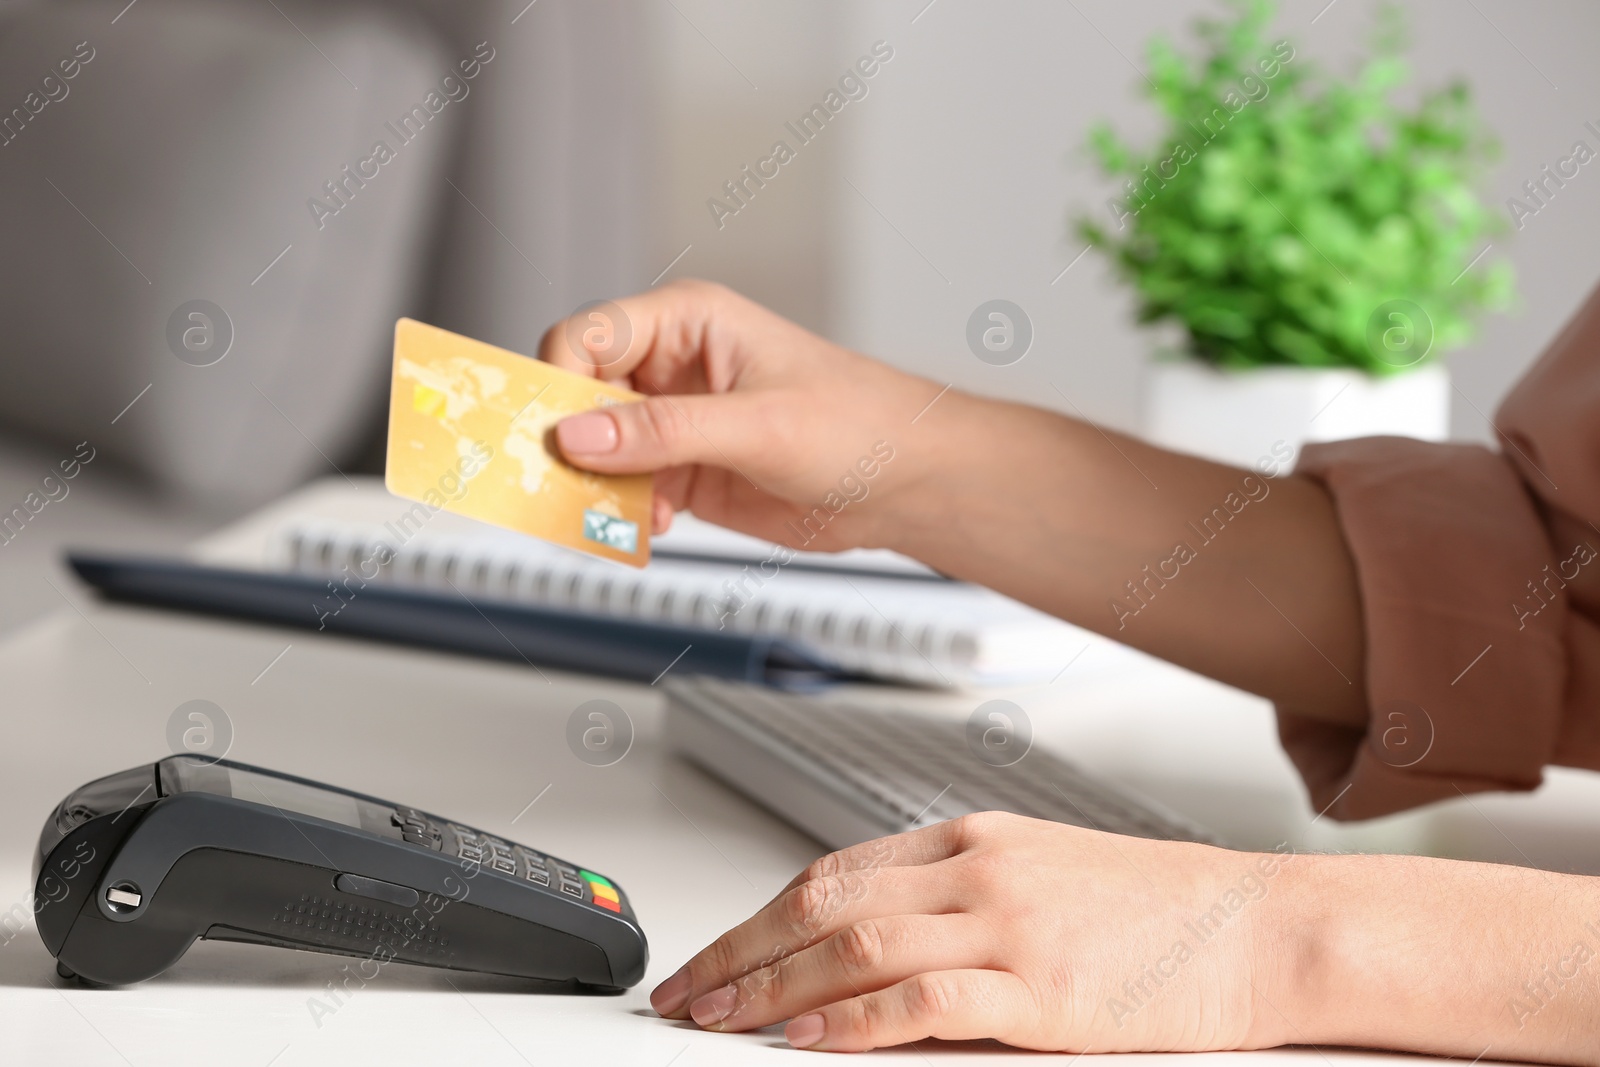 Photo of Woman using modern payment terminal at table indoors, closeup